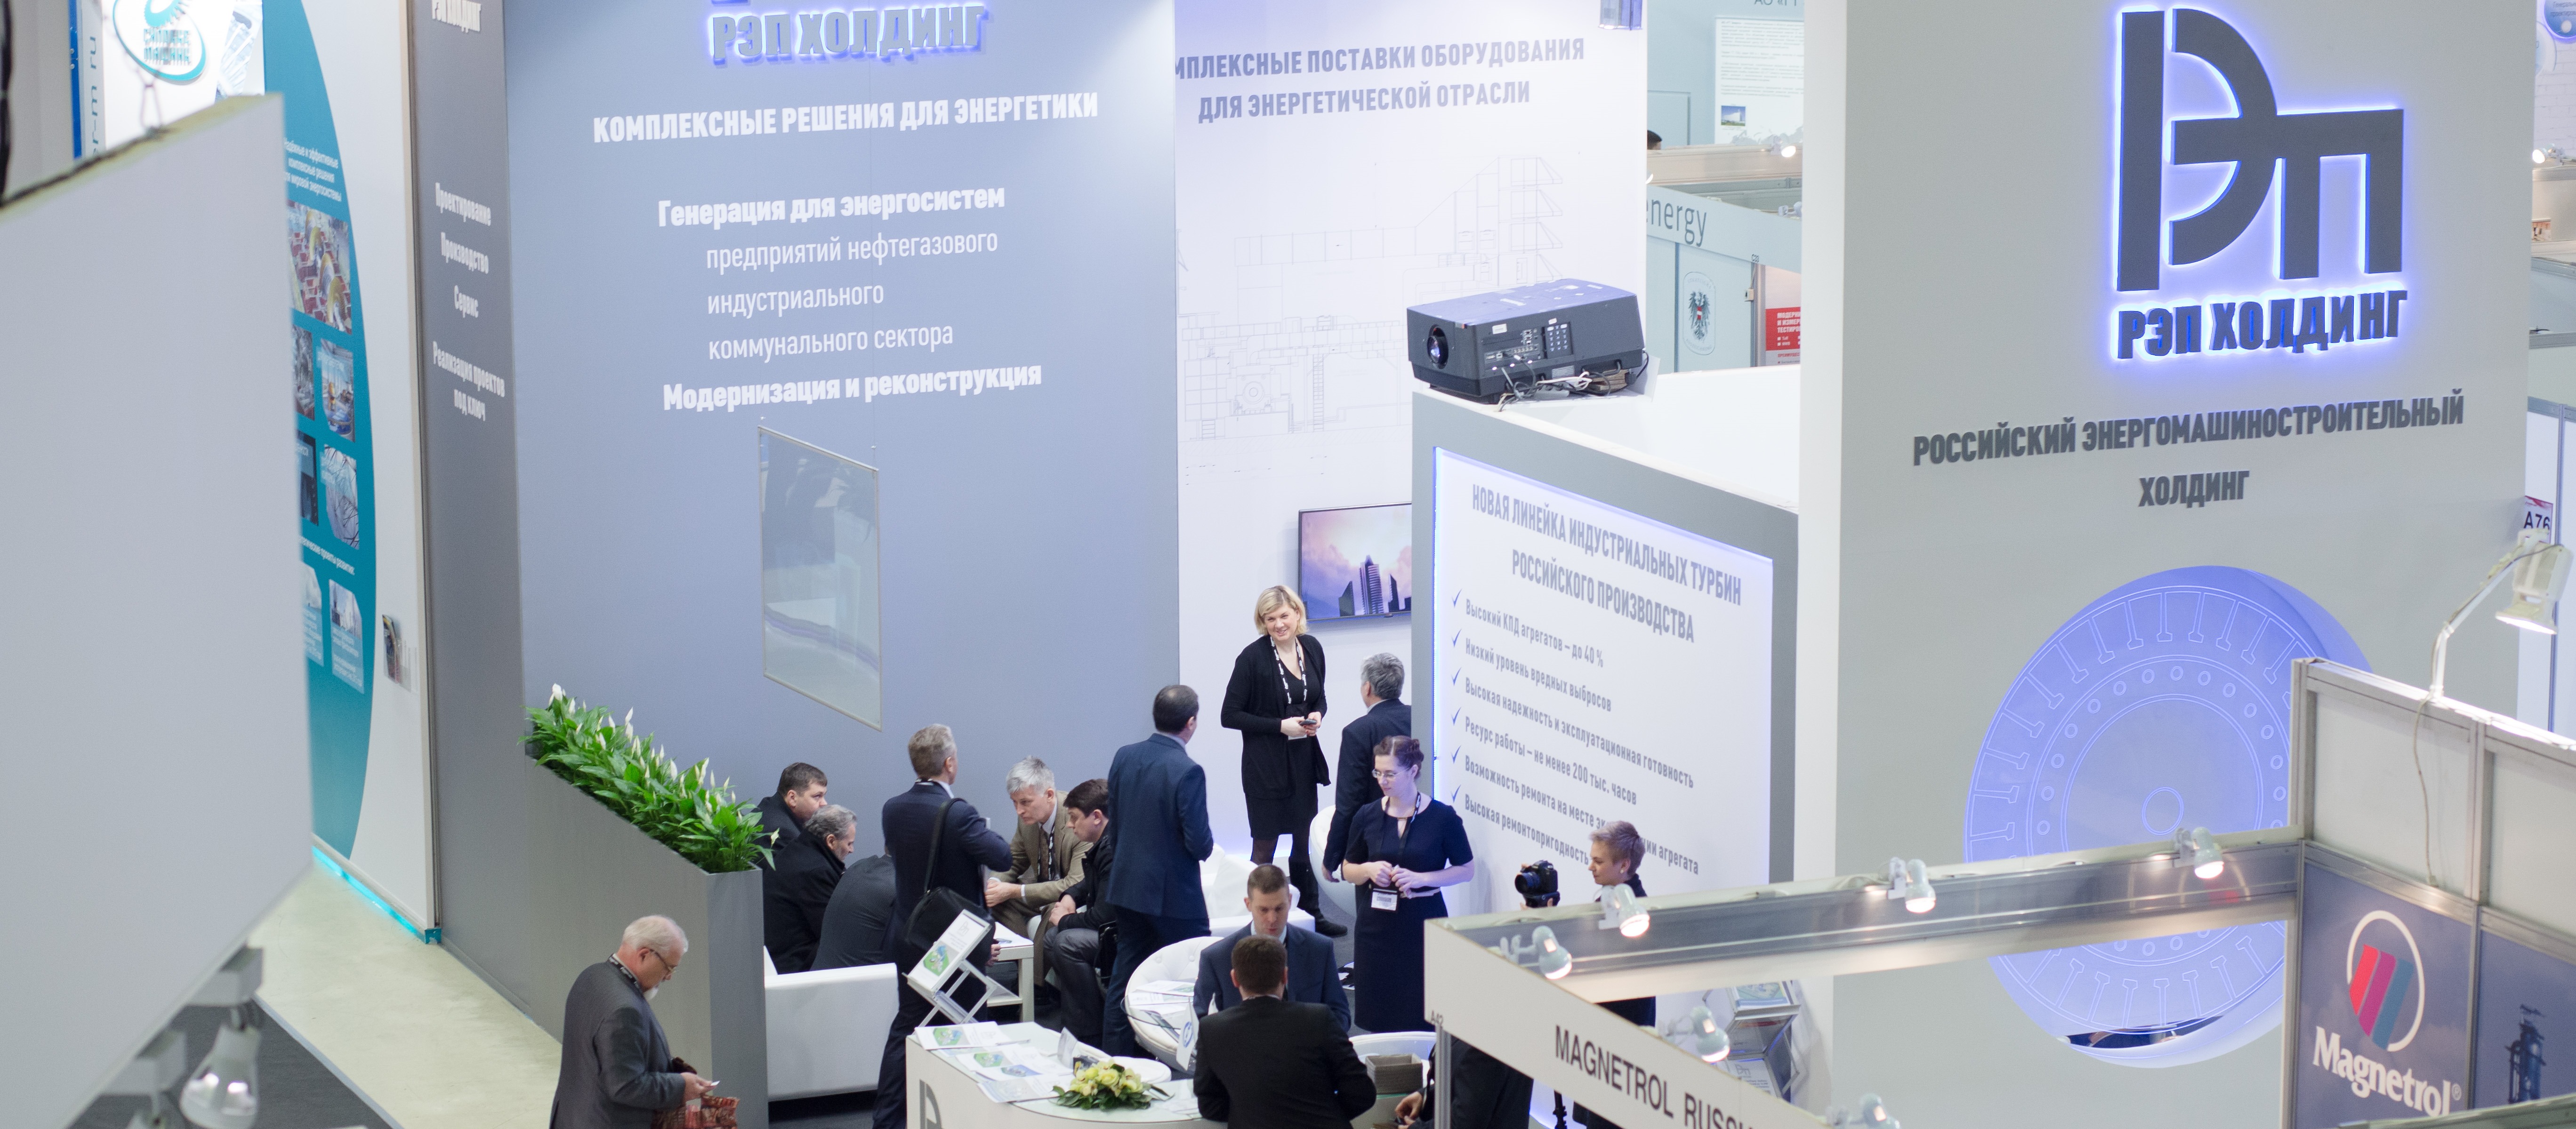 Exhibition Power Gen Russia, March 3-5, 2015